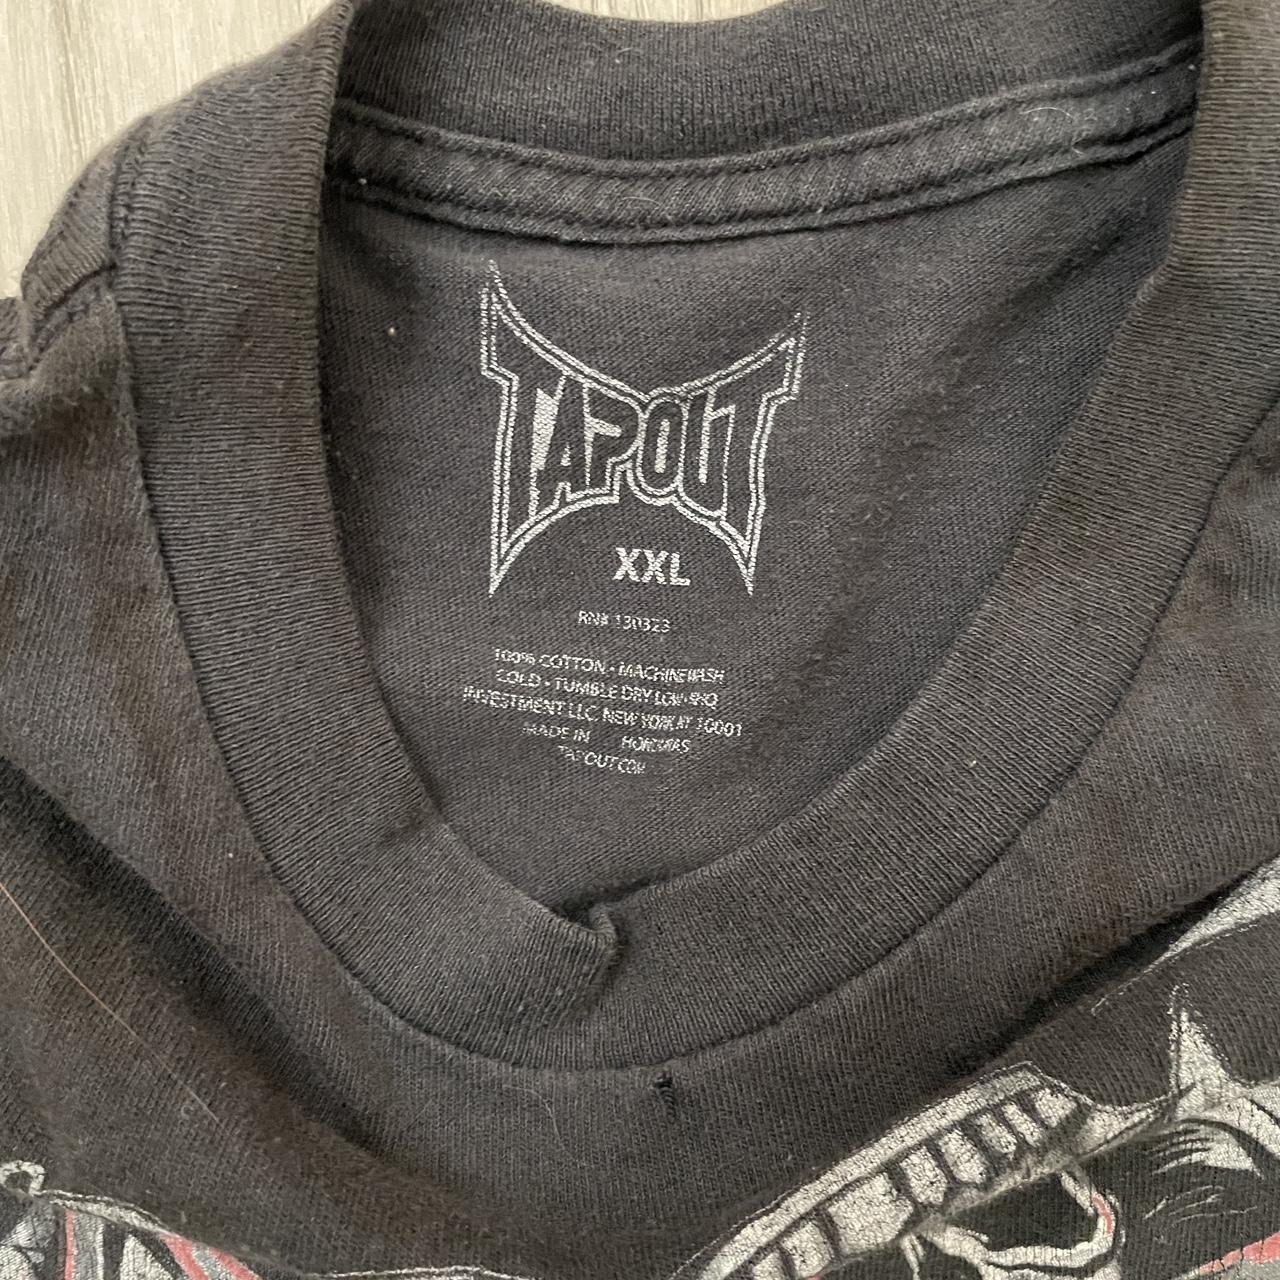 Sick tapout y2k shirt Design is soooo tuff 🙏🏼 sadly... - Depop